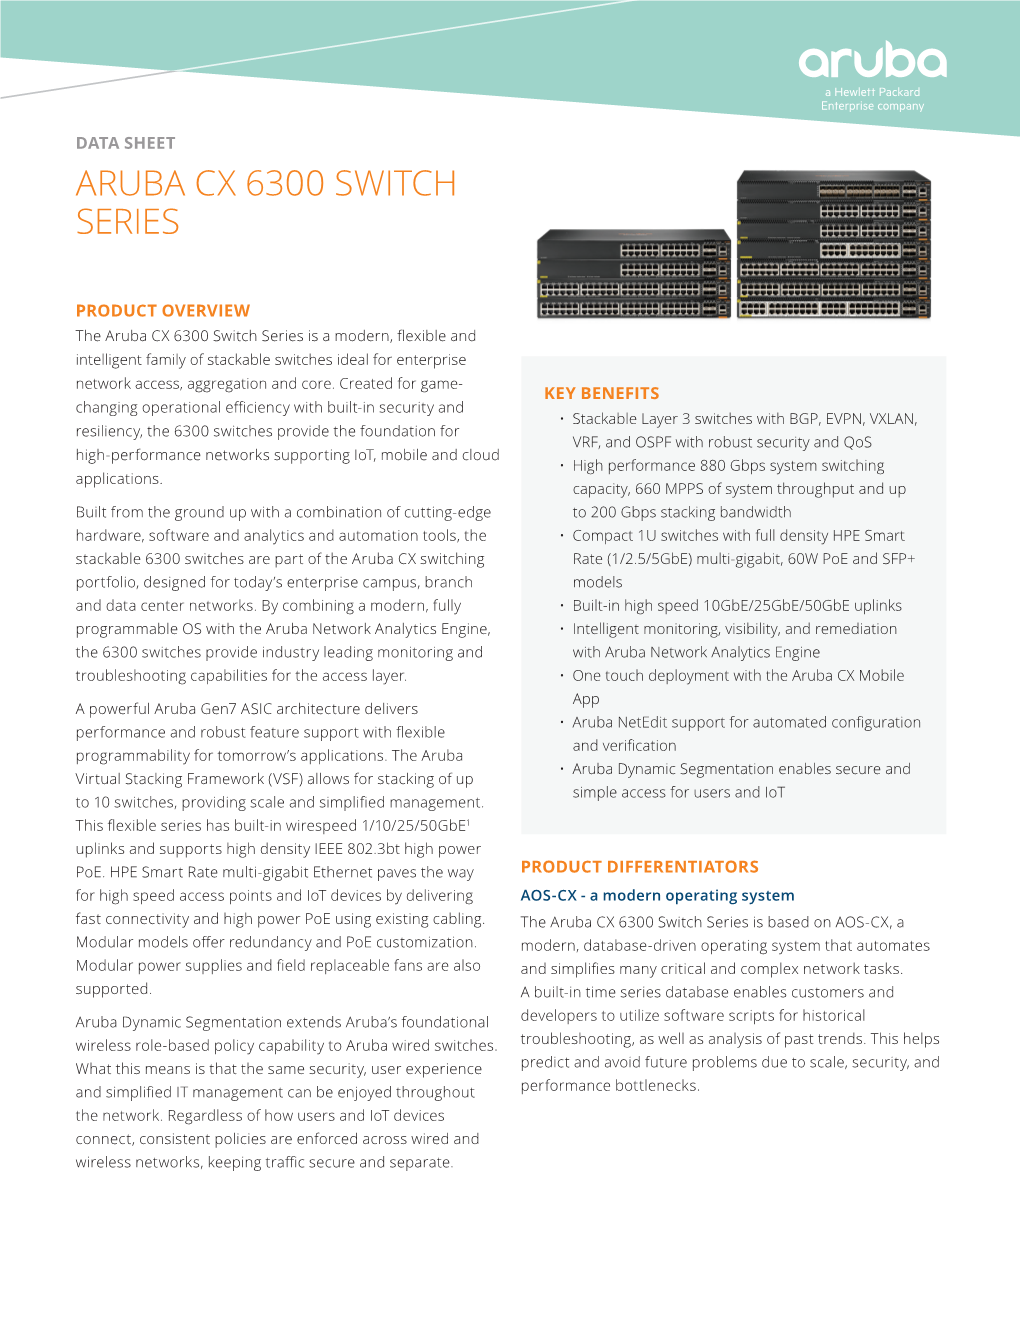 Aruba CX 6300 Series Switch Data Sheet